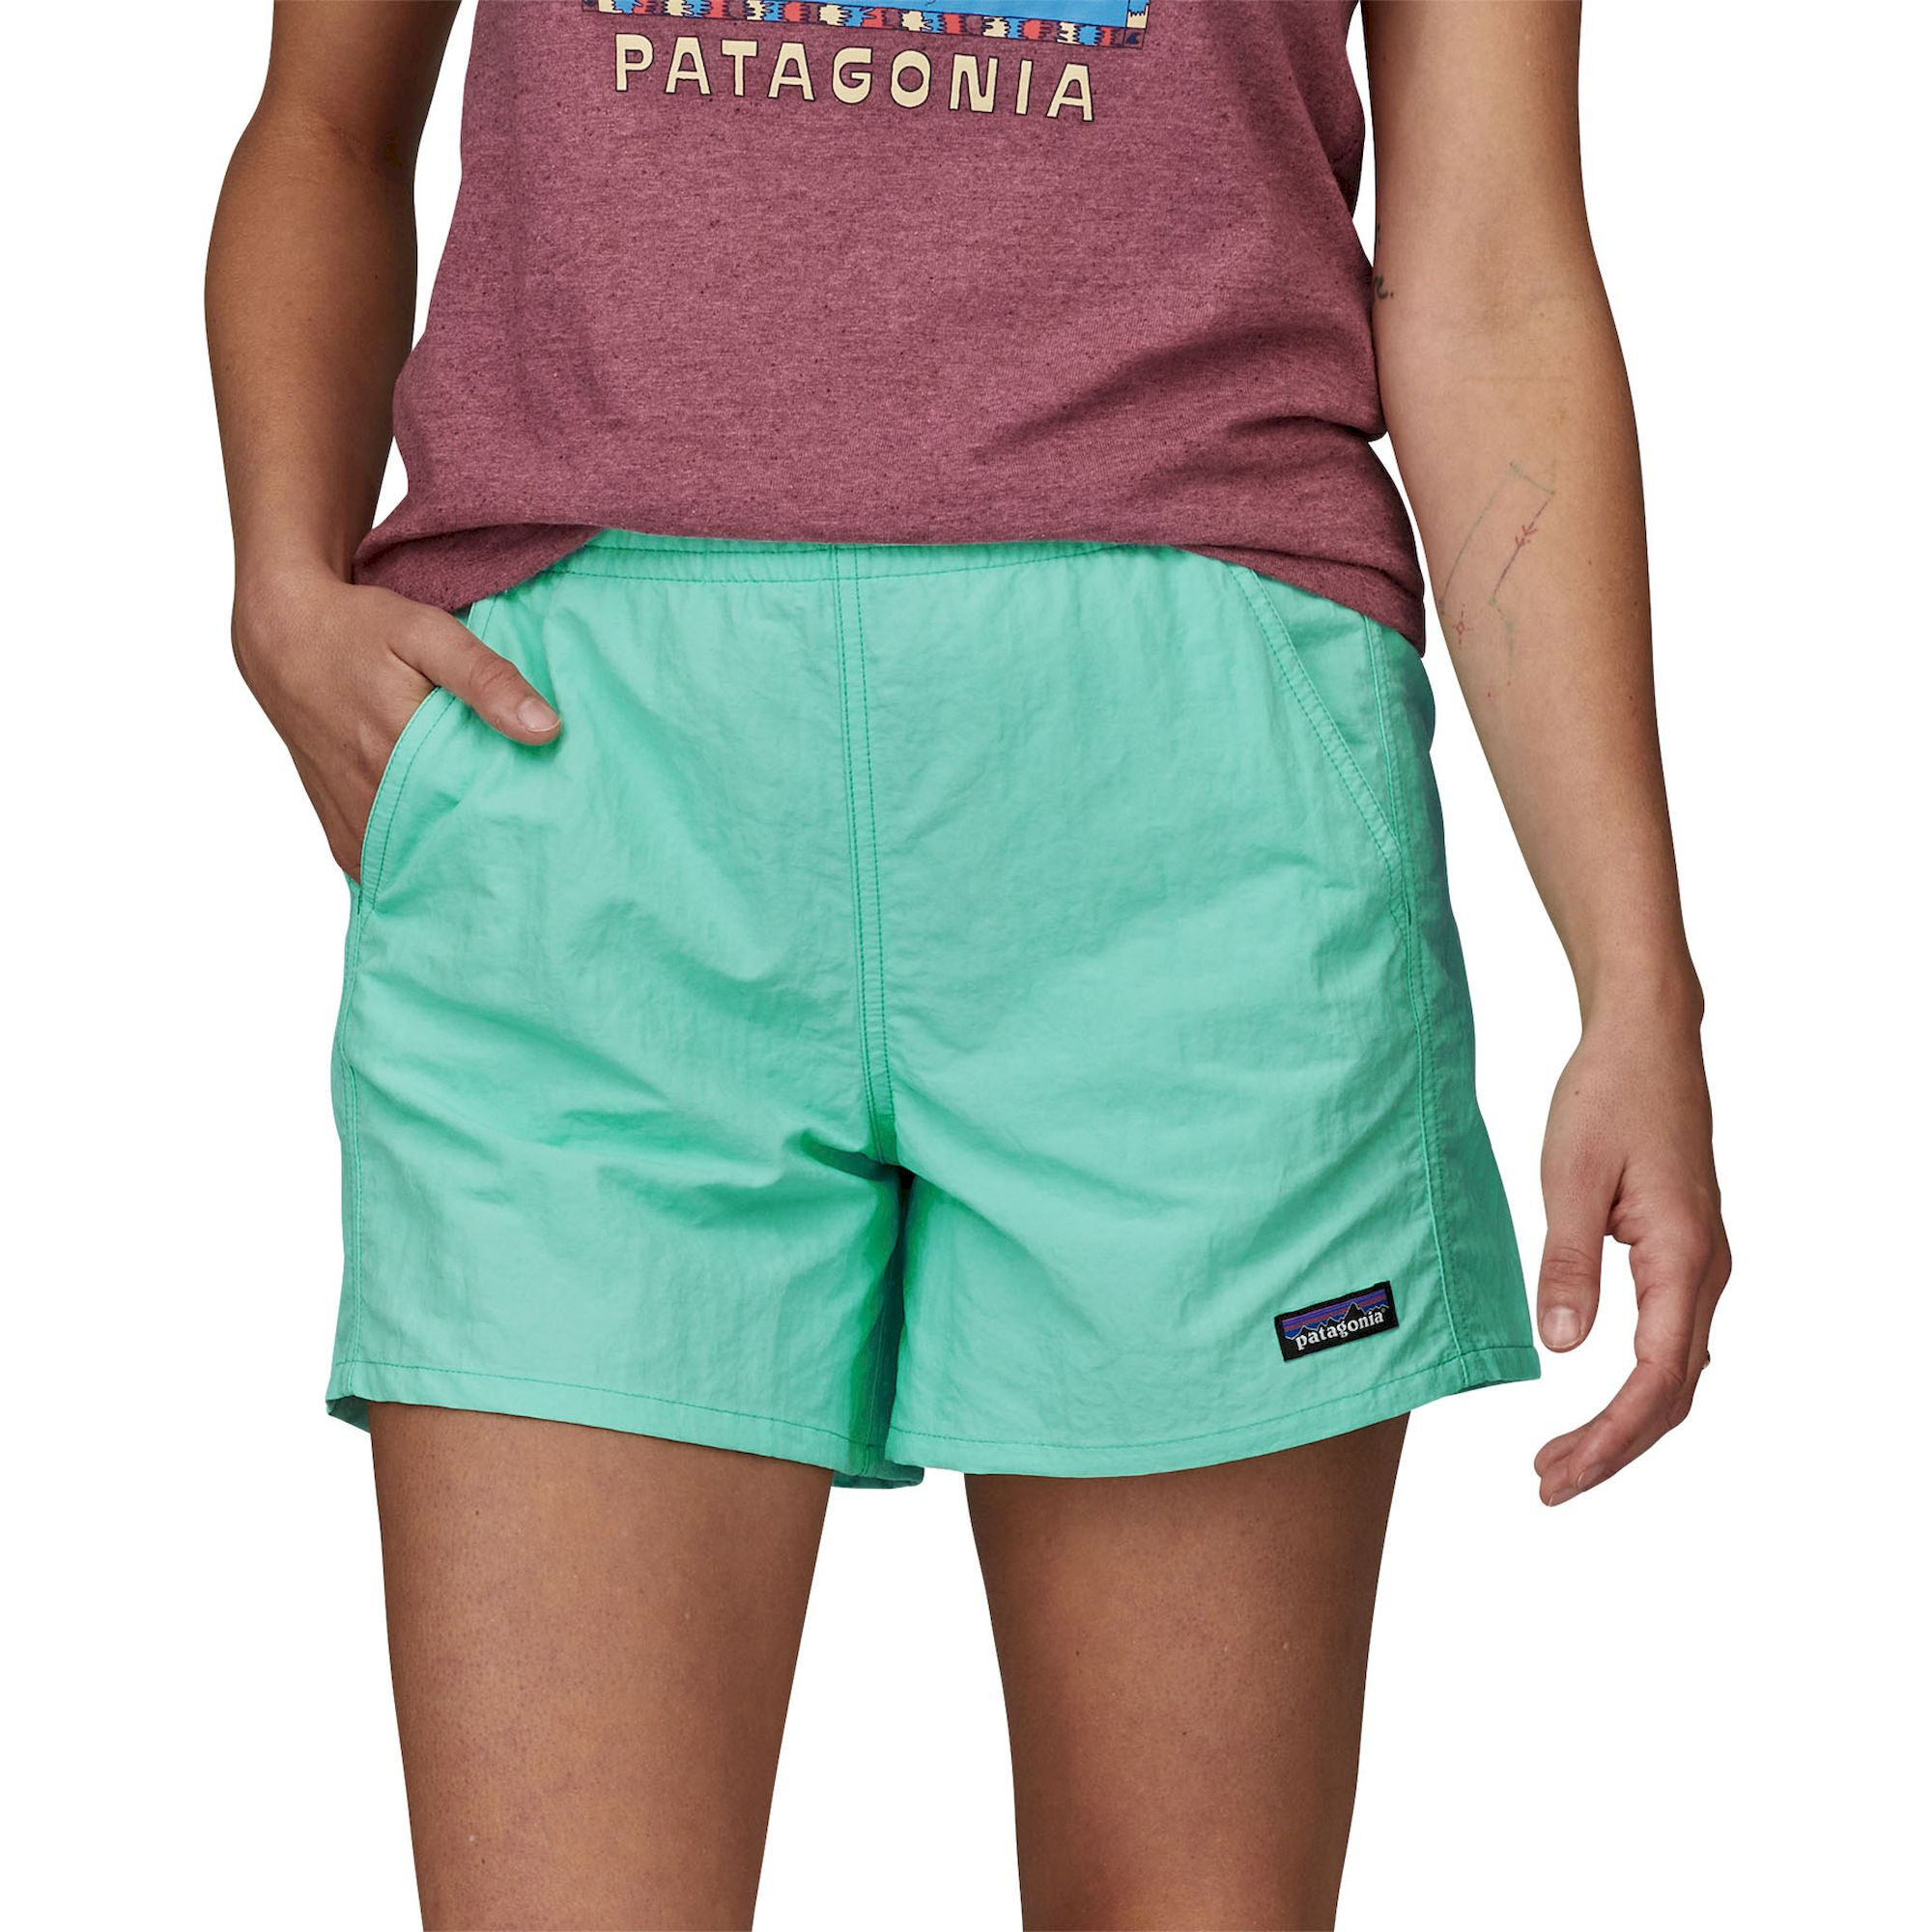 Patagonia Baggies Shorts 5 in. - Short - Dames